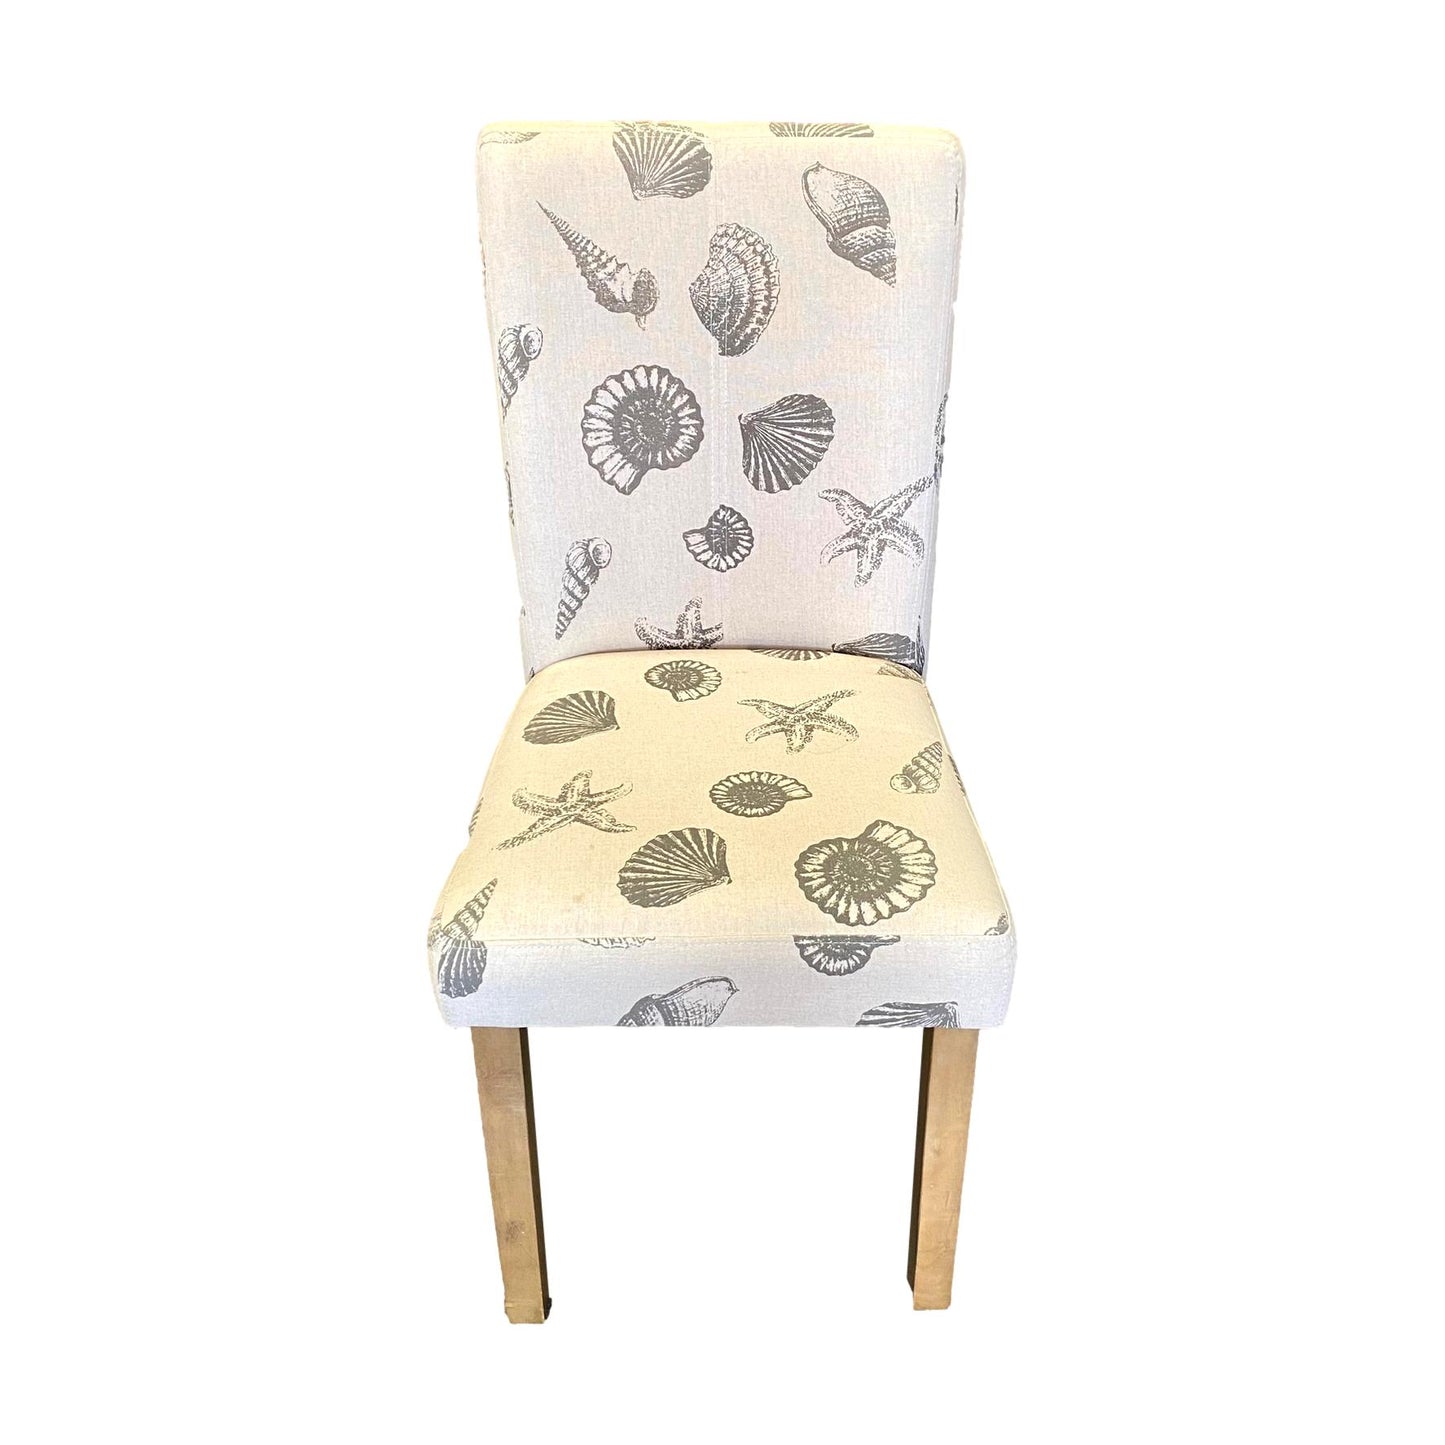 Upholstered Shell Chair